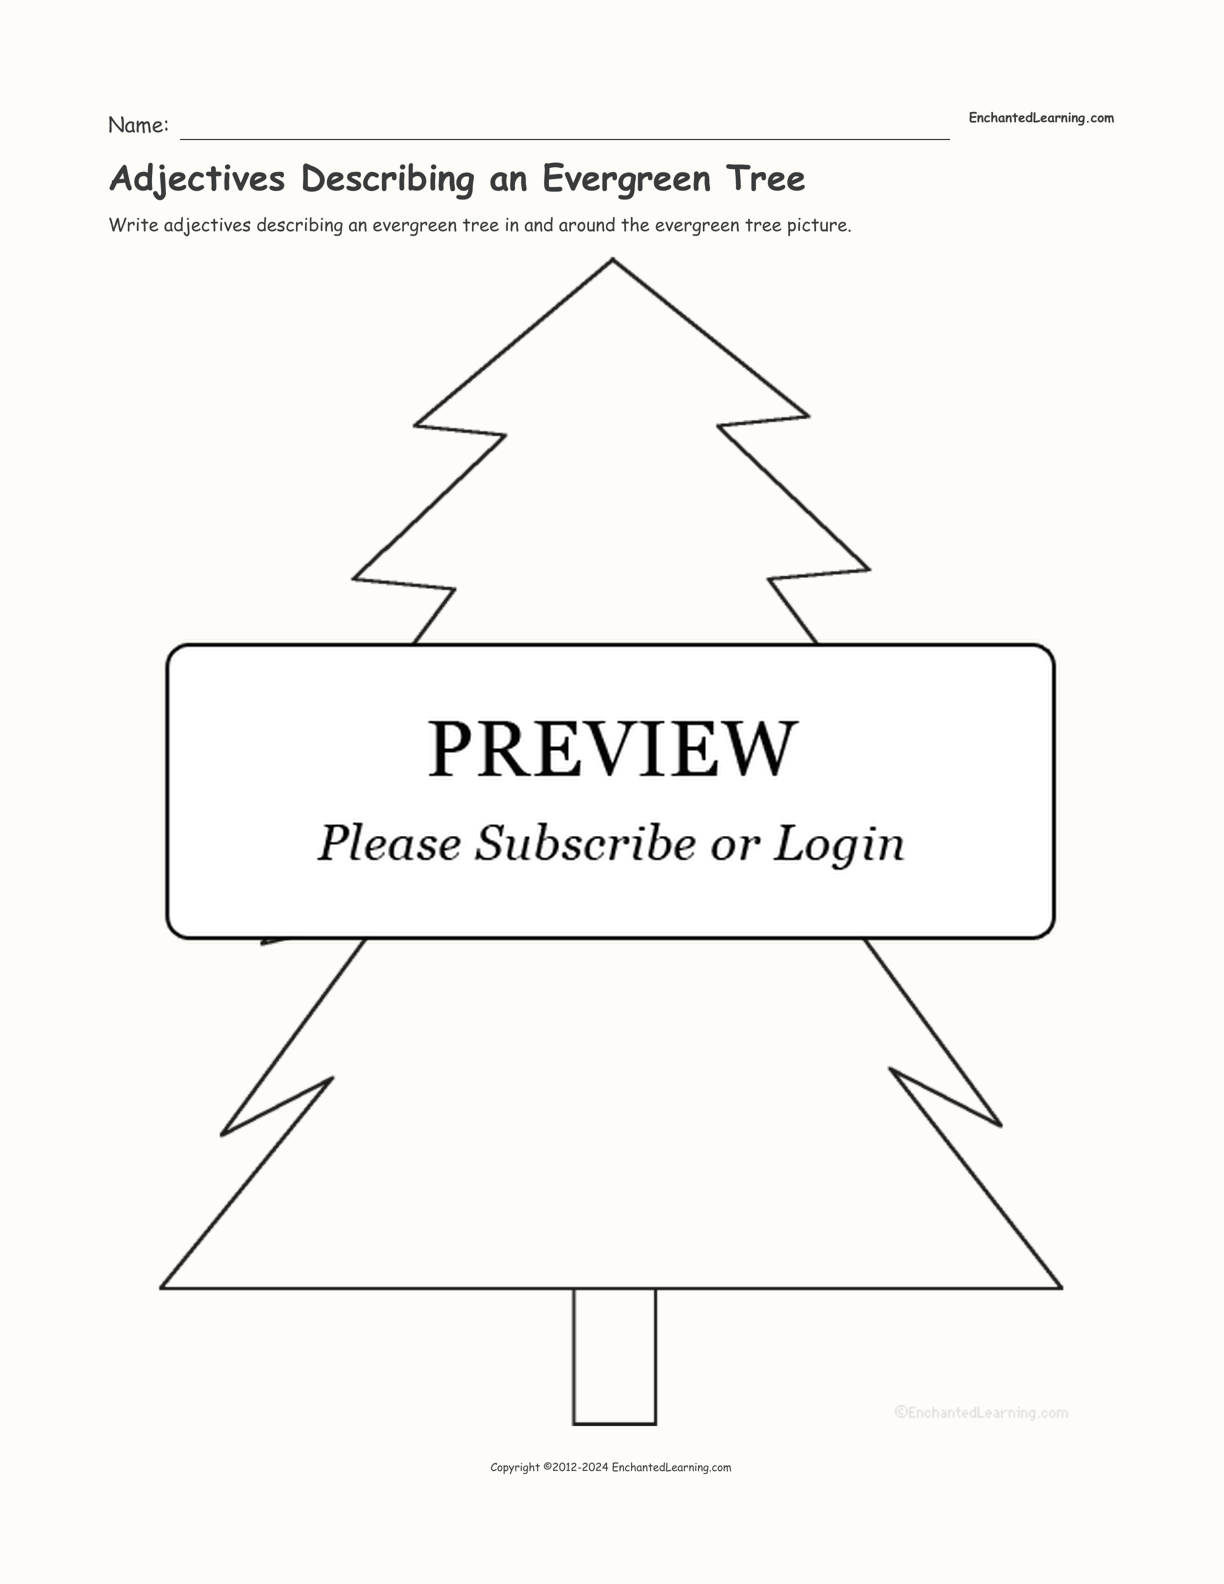 Adjectives Describing an Evergreen Tree interactive worksheet page 1